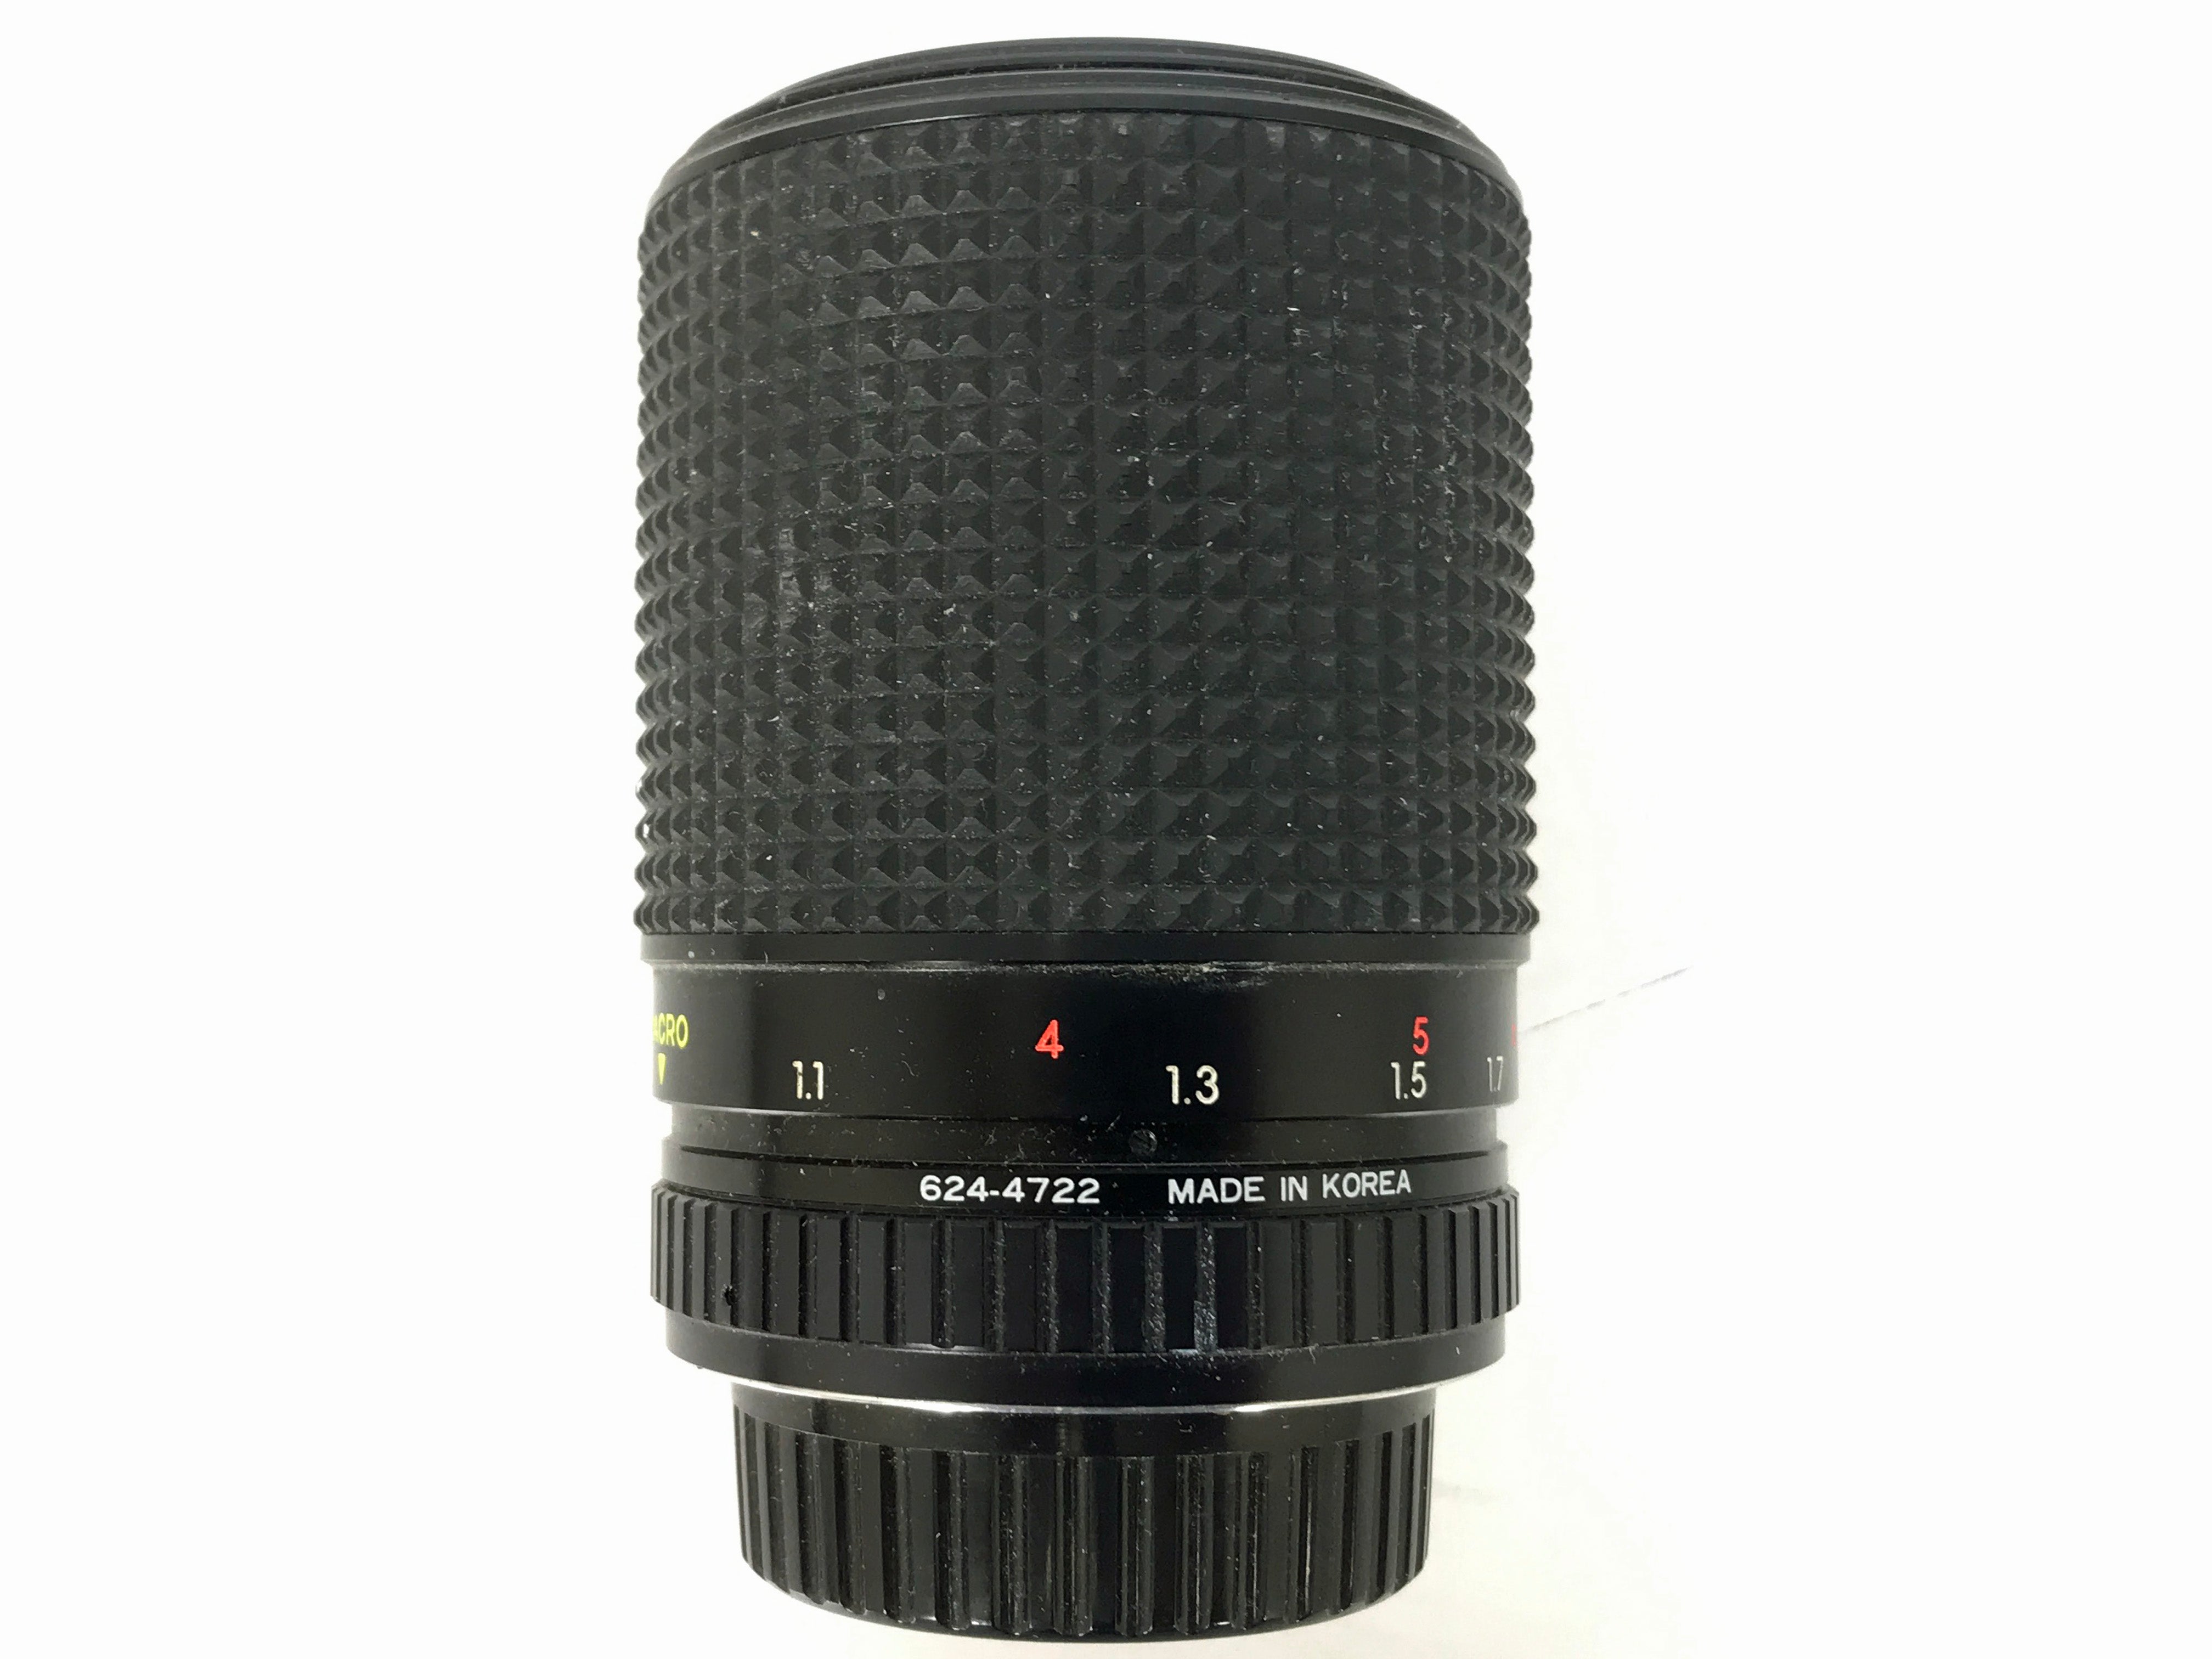 Prospec Auto Zoom f=70-210mm 1:4.0-5.6 Camera Lens